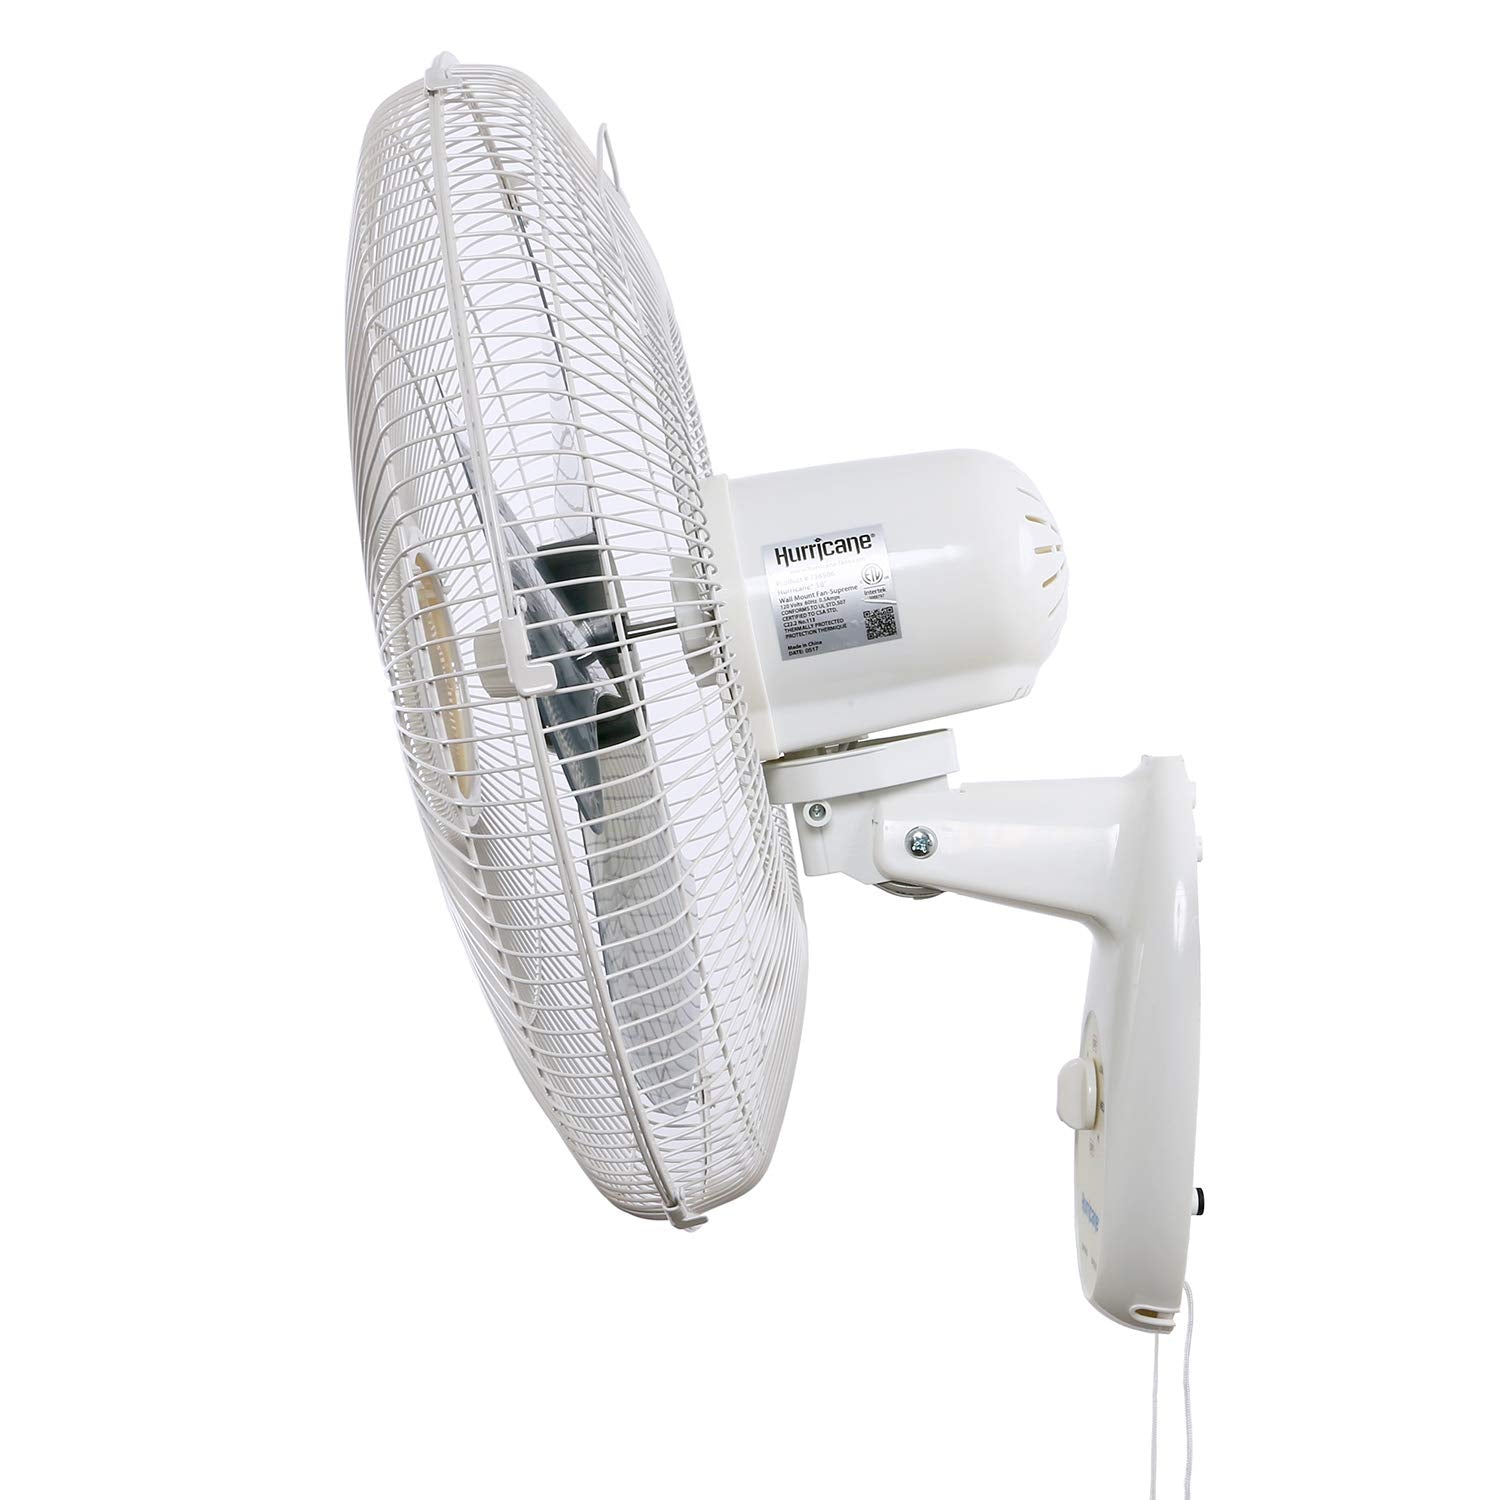 Hurricane® Supreme Oscillating Wall Mount Fan 18" - HGC736506